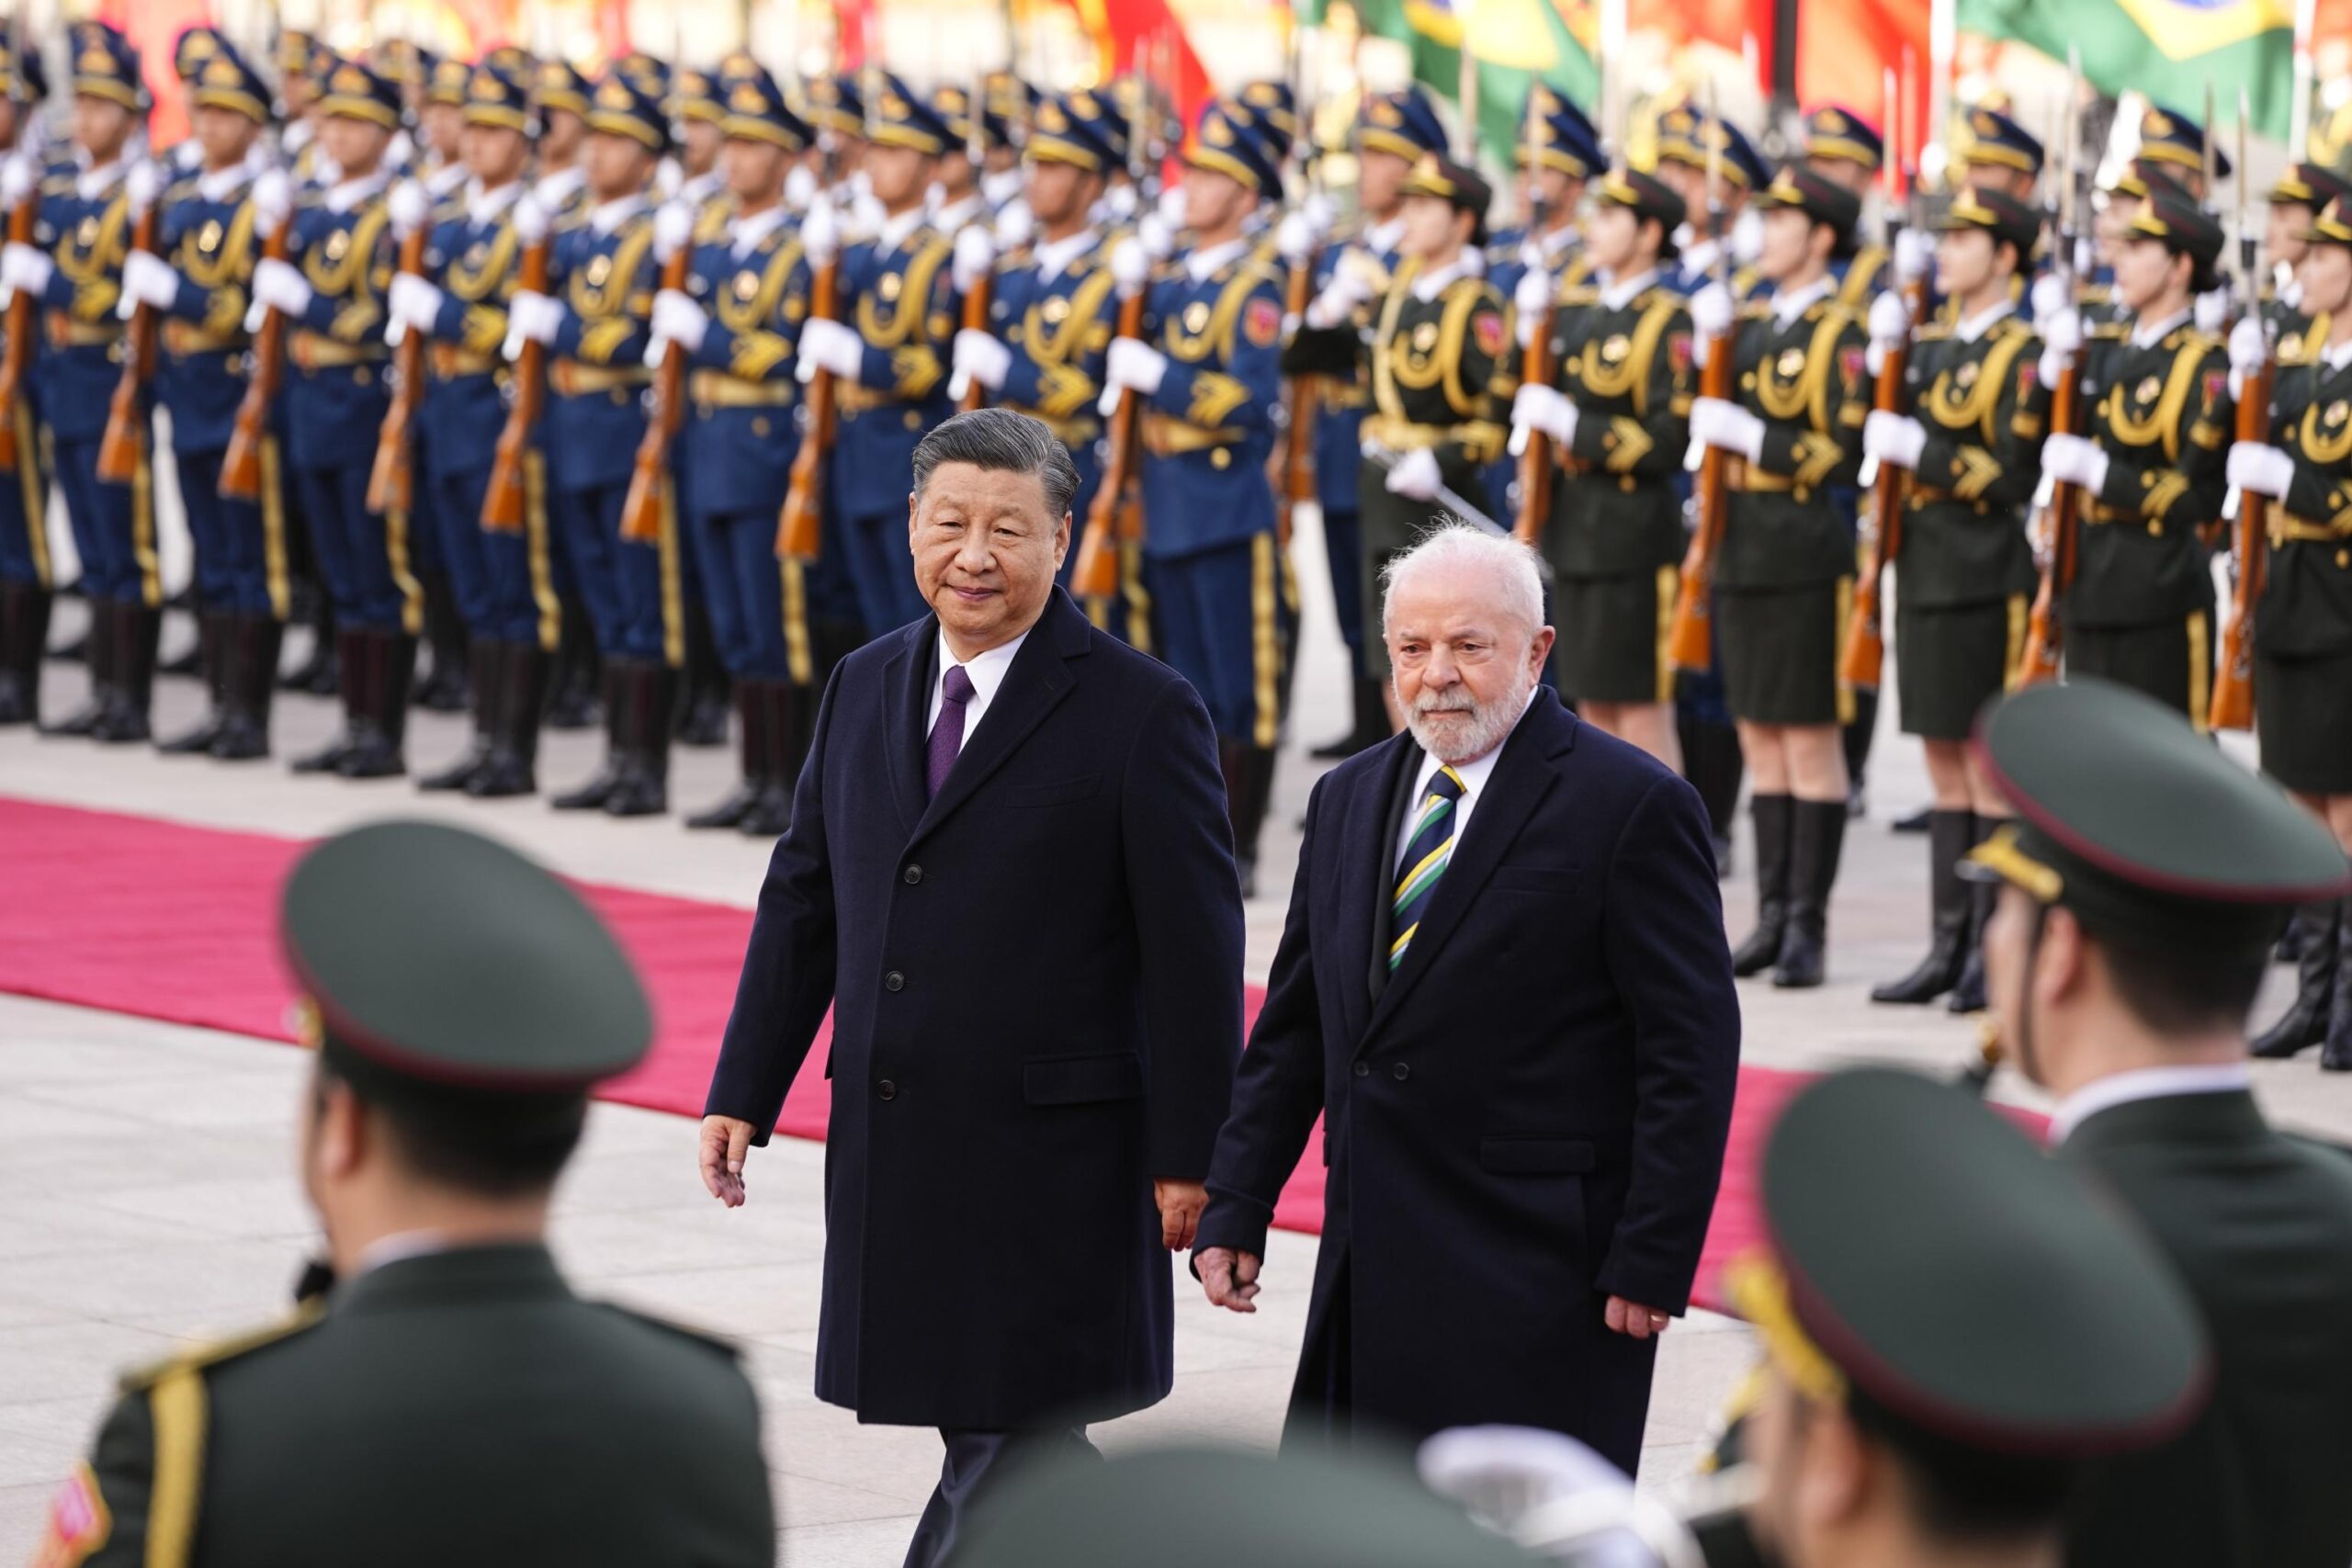 Lula in Cina: “Cambieremo la governance globale”